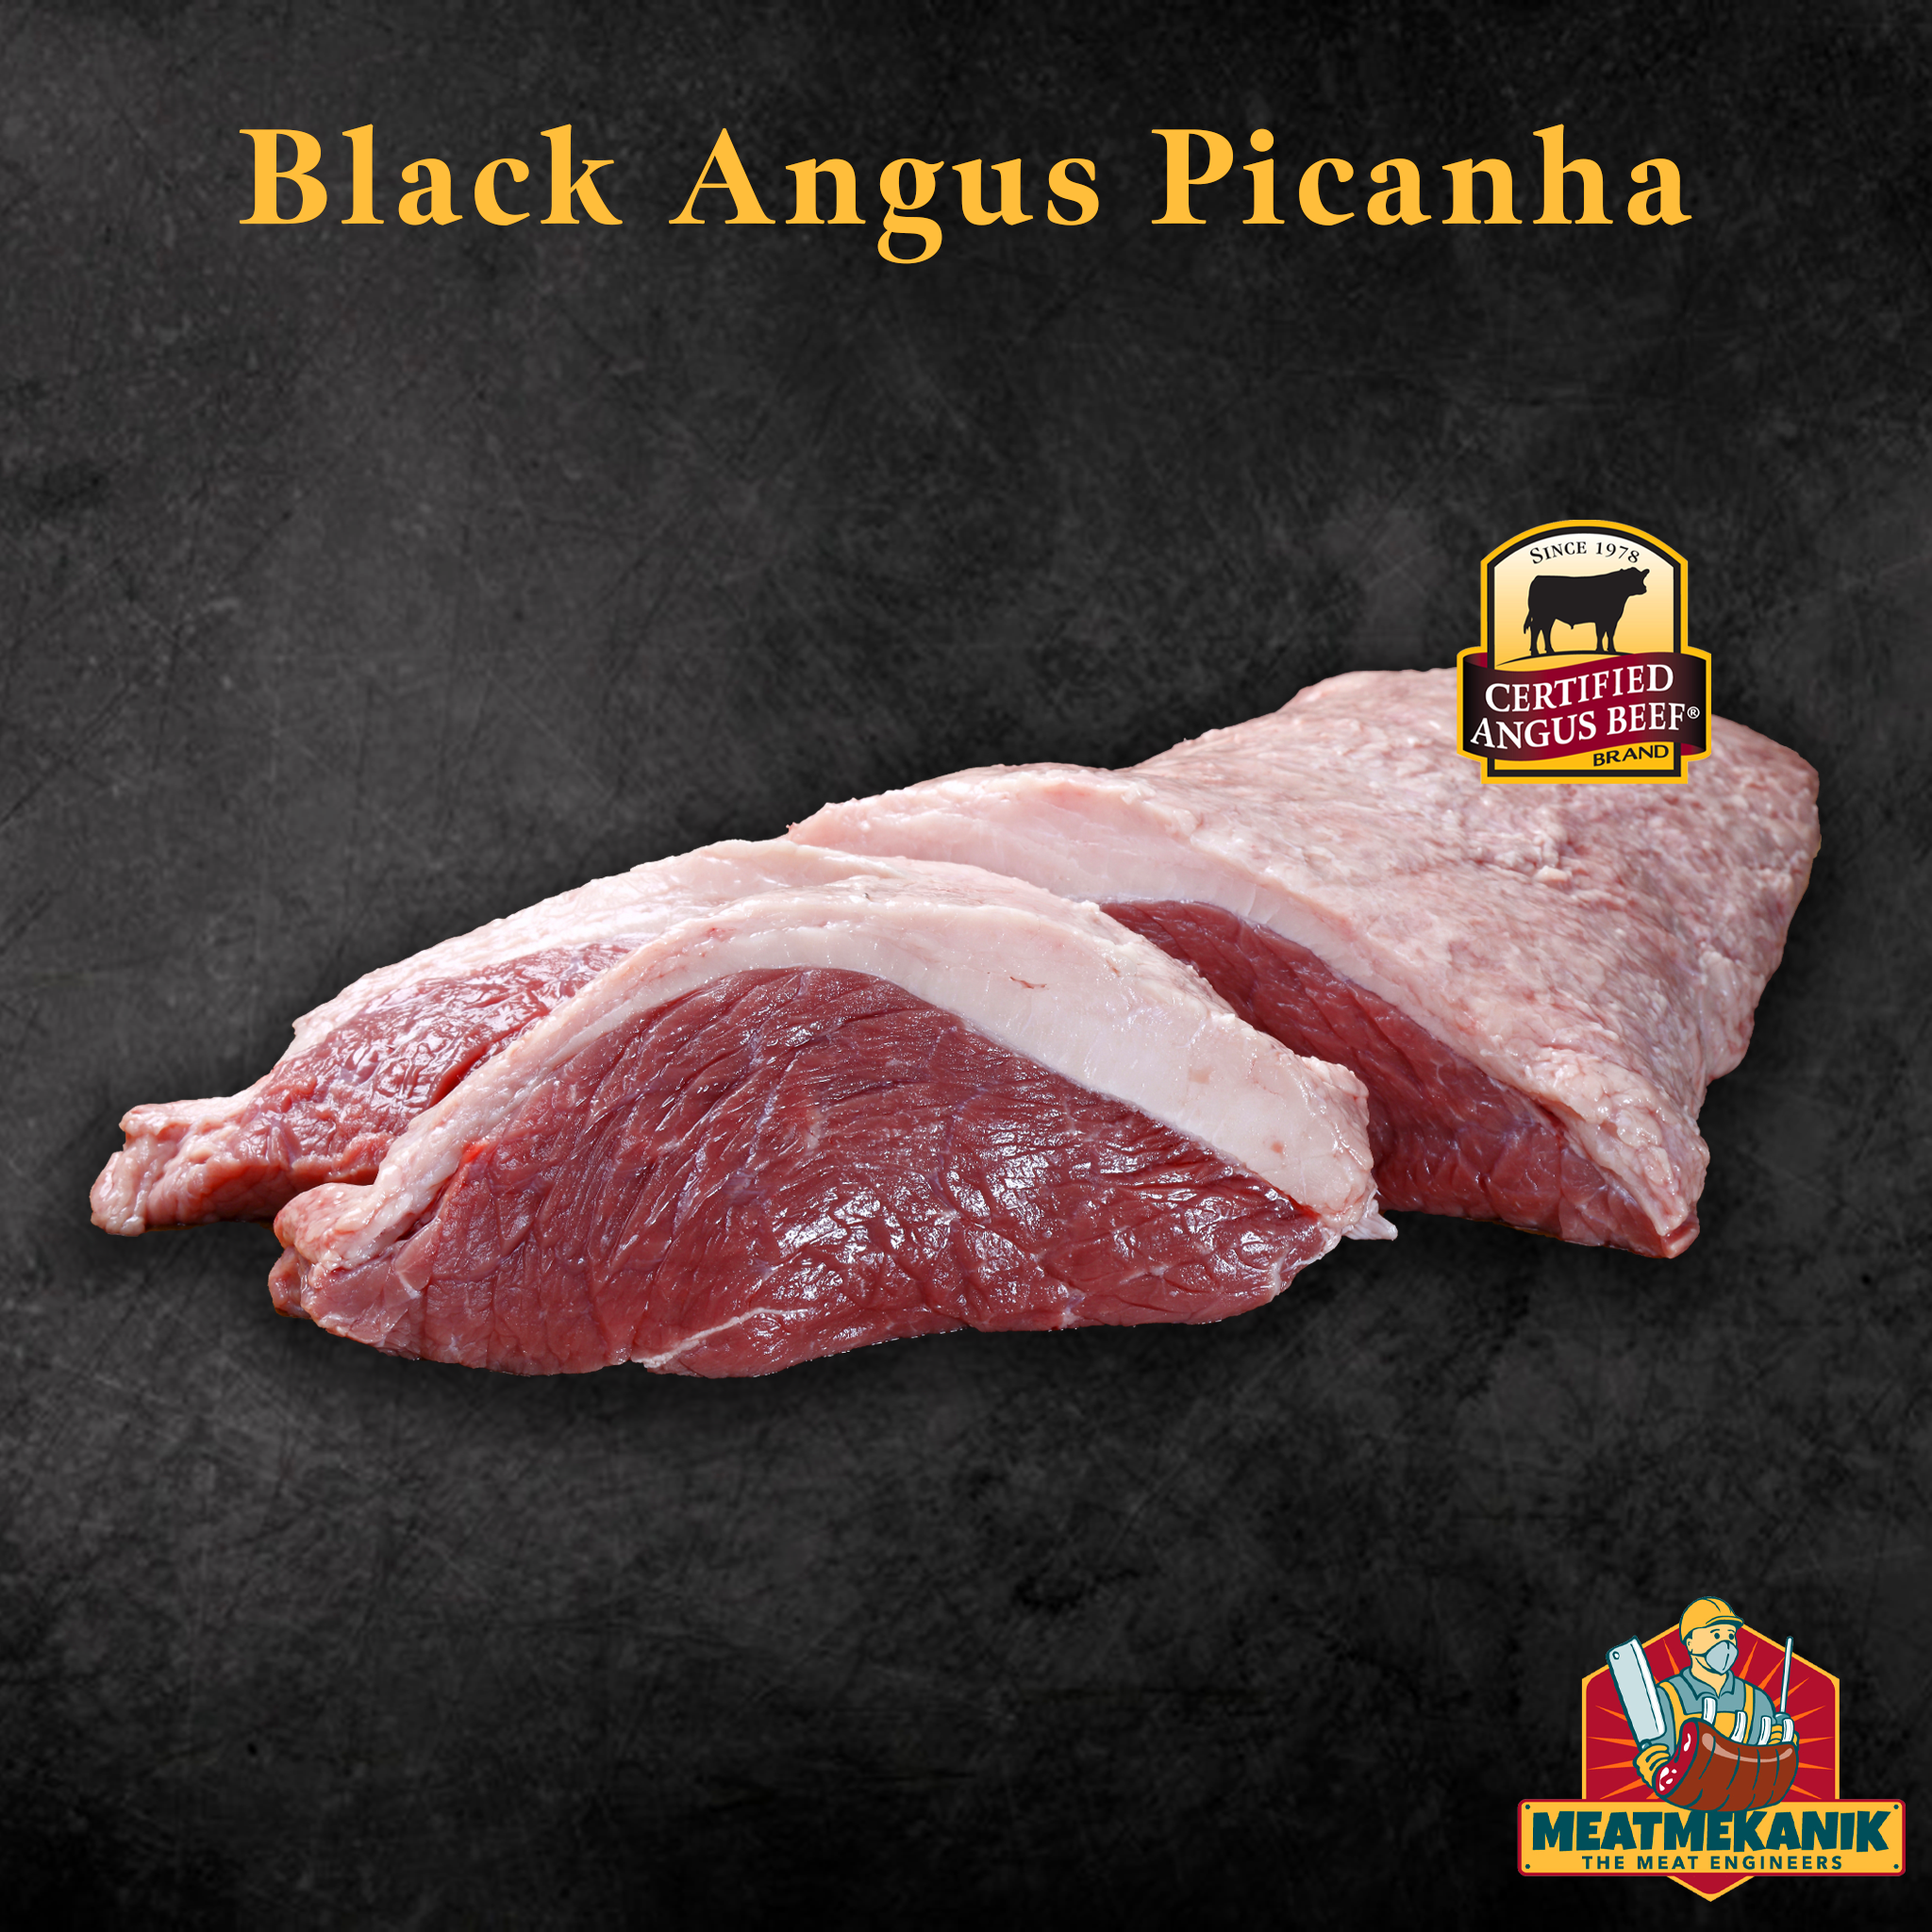 Black Angus Picanha - Meat Mekanik